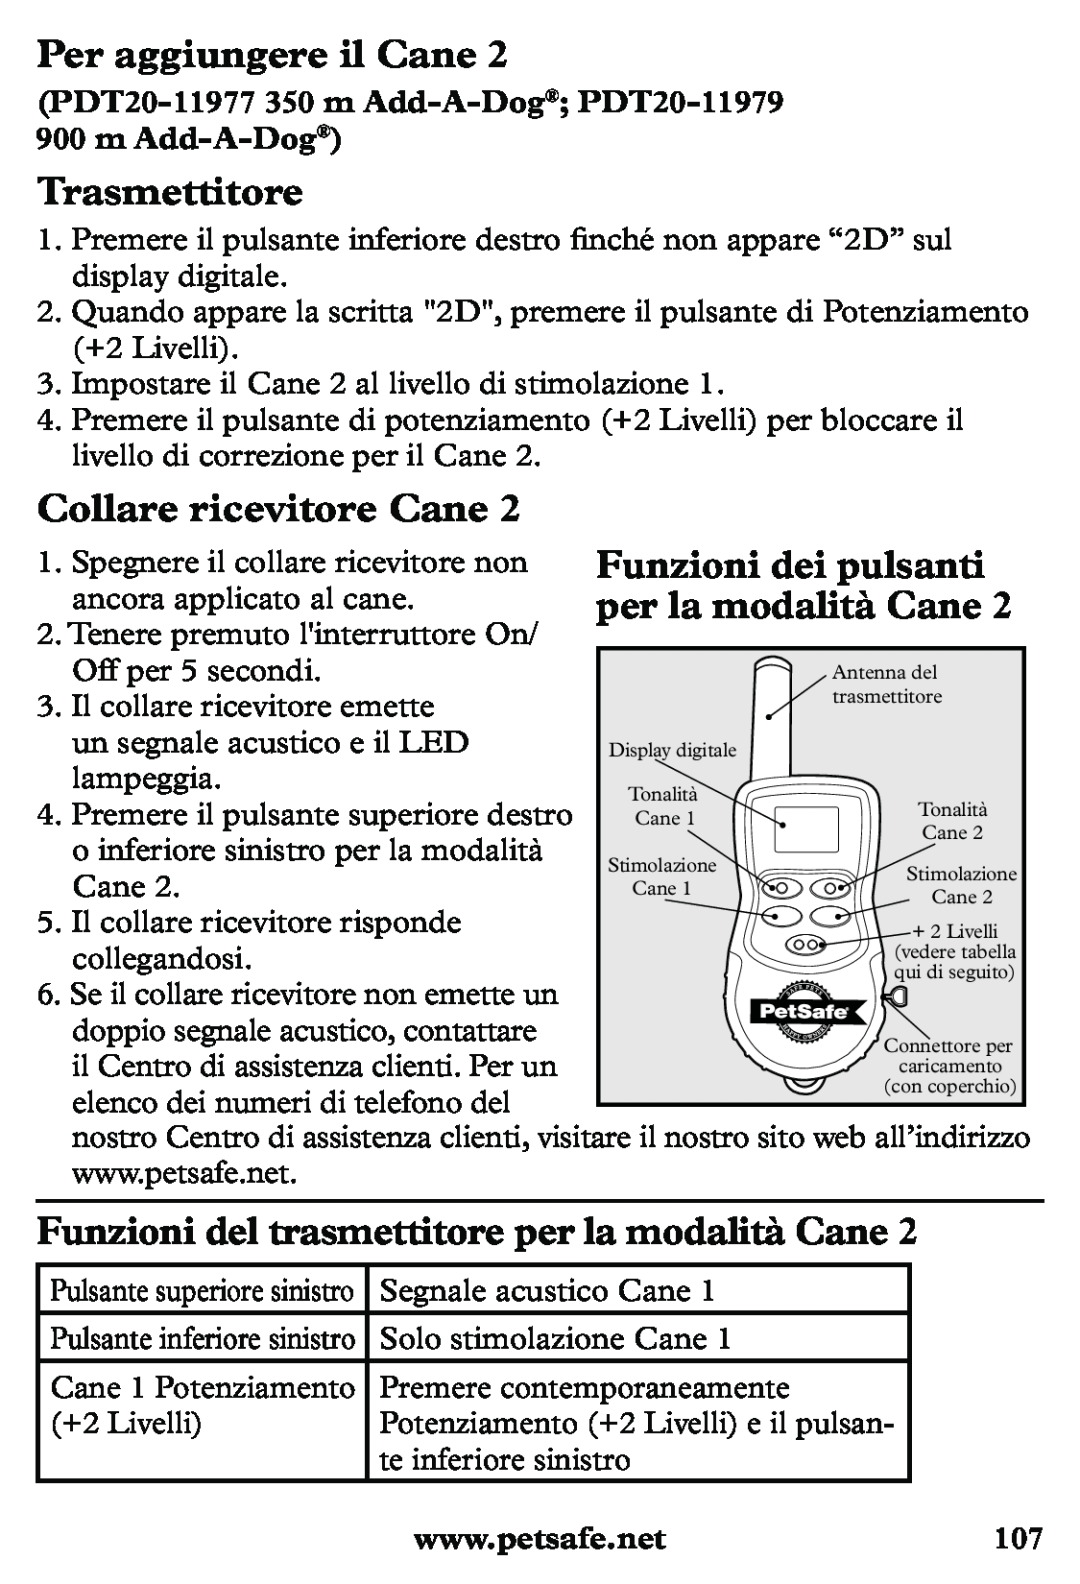 Petsafe PDT20-11939 manuel dutilisation Per aggiungere il Cane, Trasmettitore, Collare ricevitore Cane 